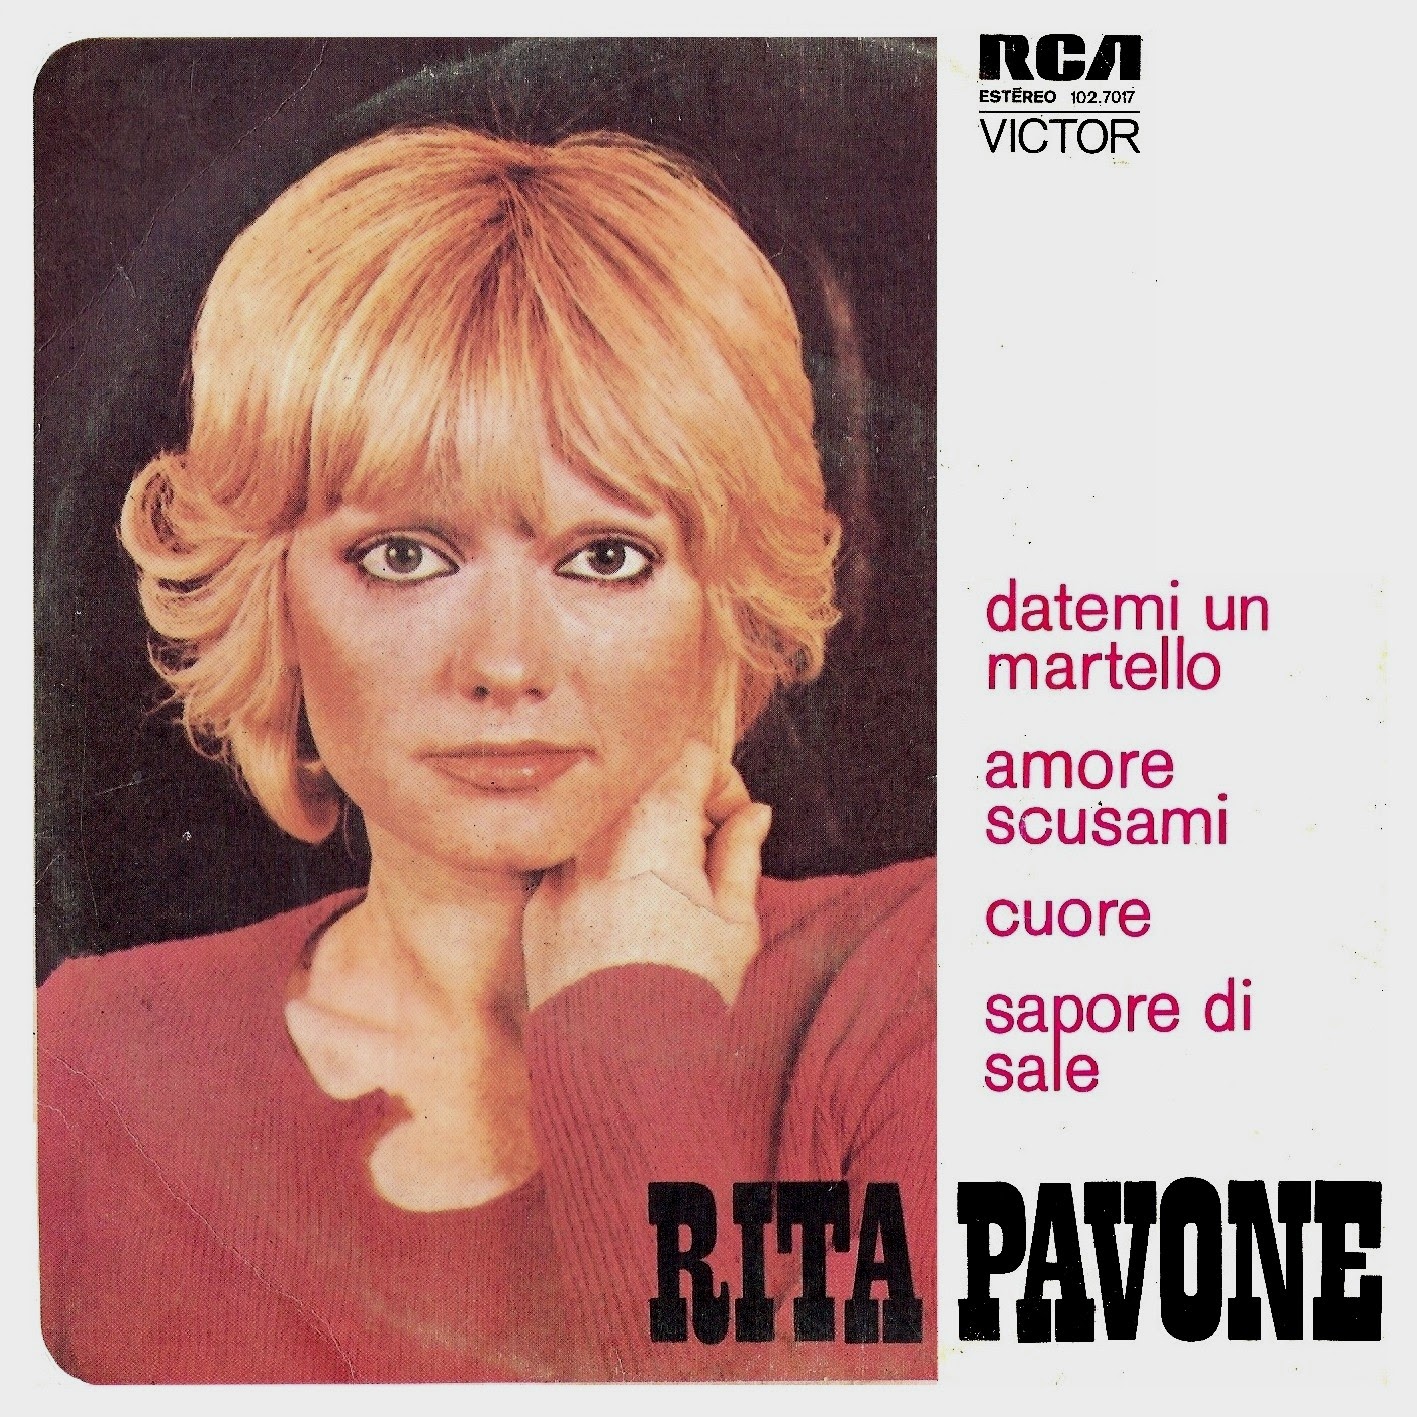 Toca de Compactos: Rita Pavone - Amore scusami - 1975